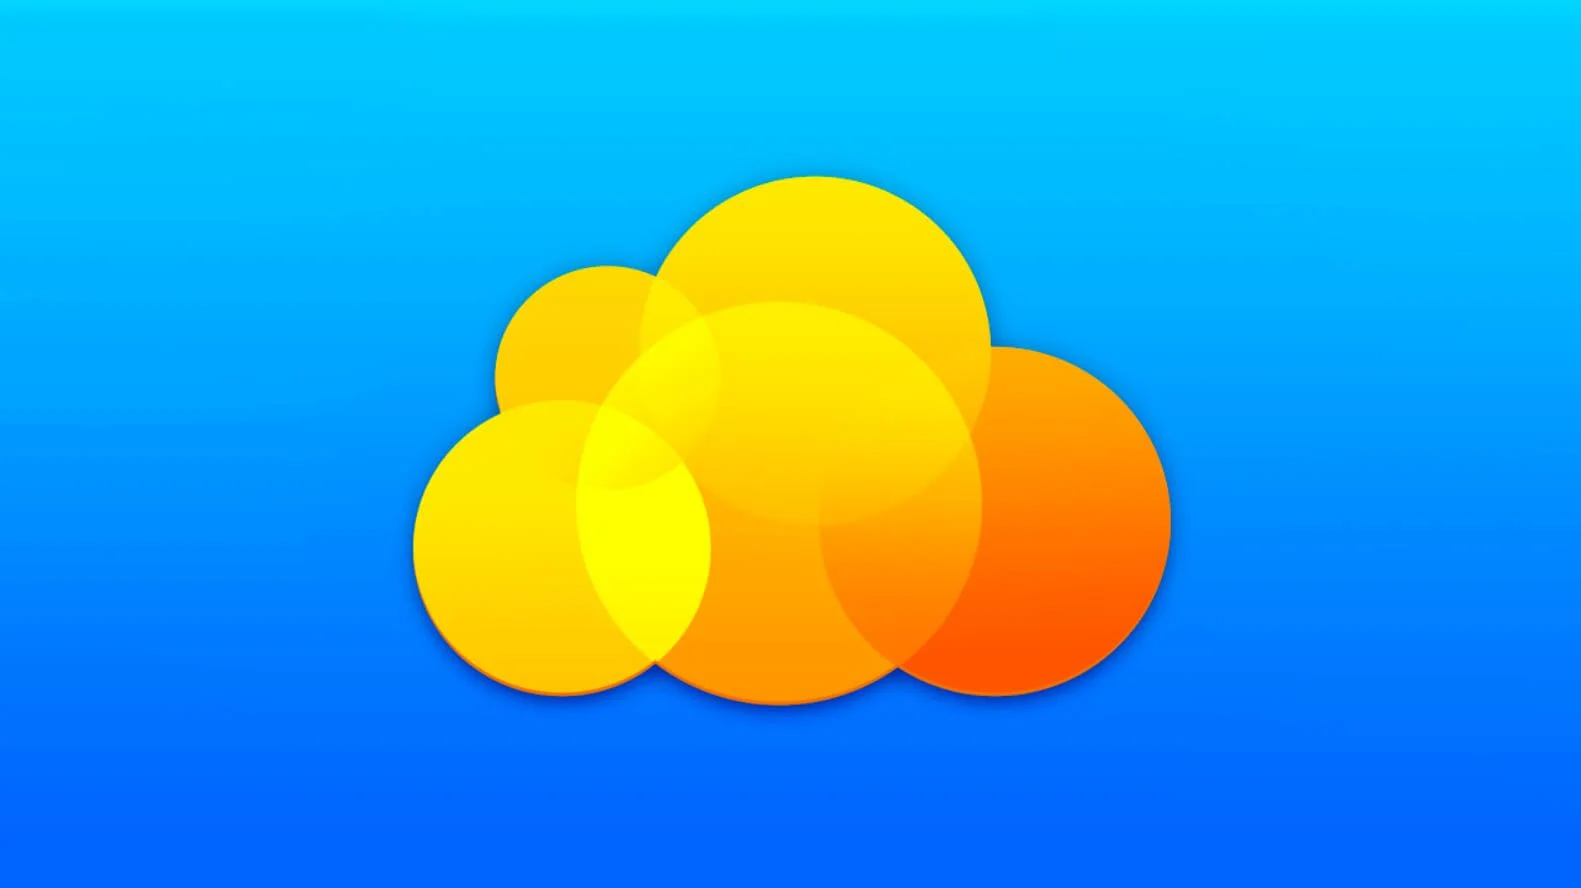 Https cloud mail ru public 2dz6 abljybpxk. Облако майл. Облако mail.ru логотип. Облачное хранилище mail. Иконка облако мэйл.